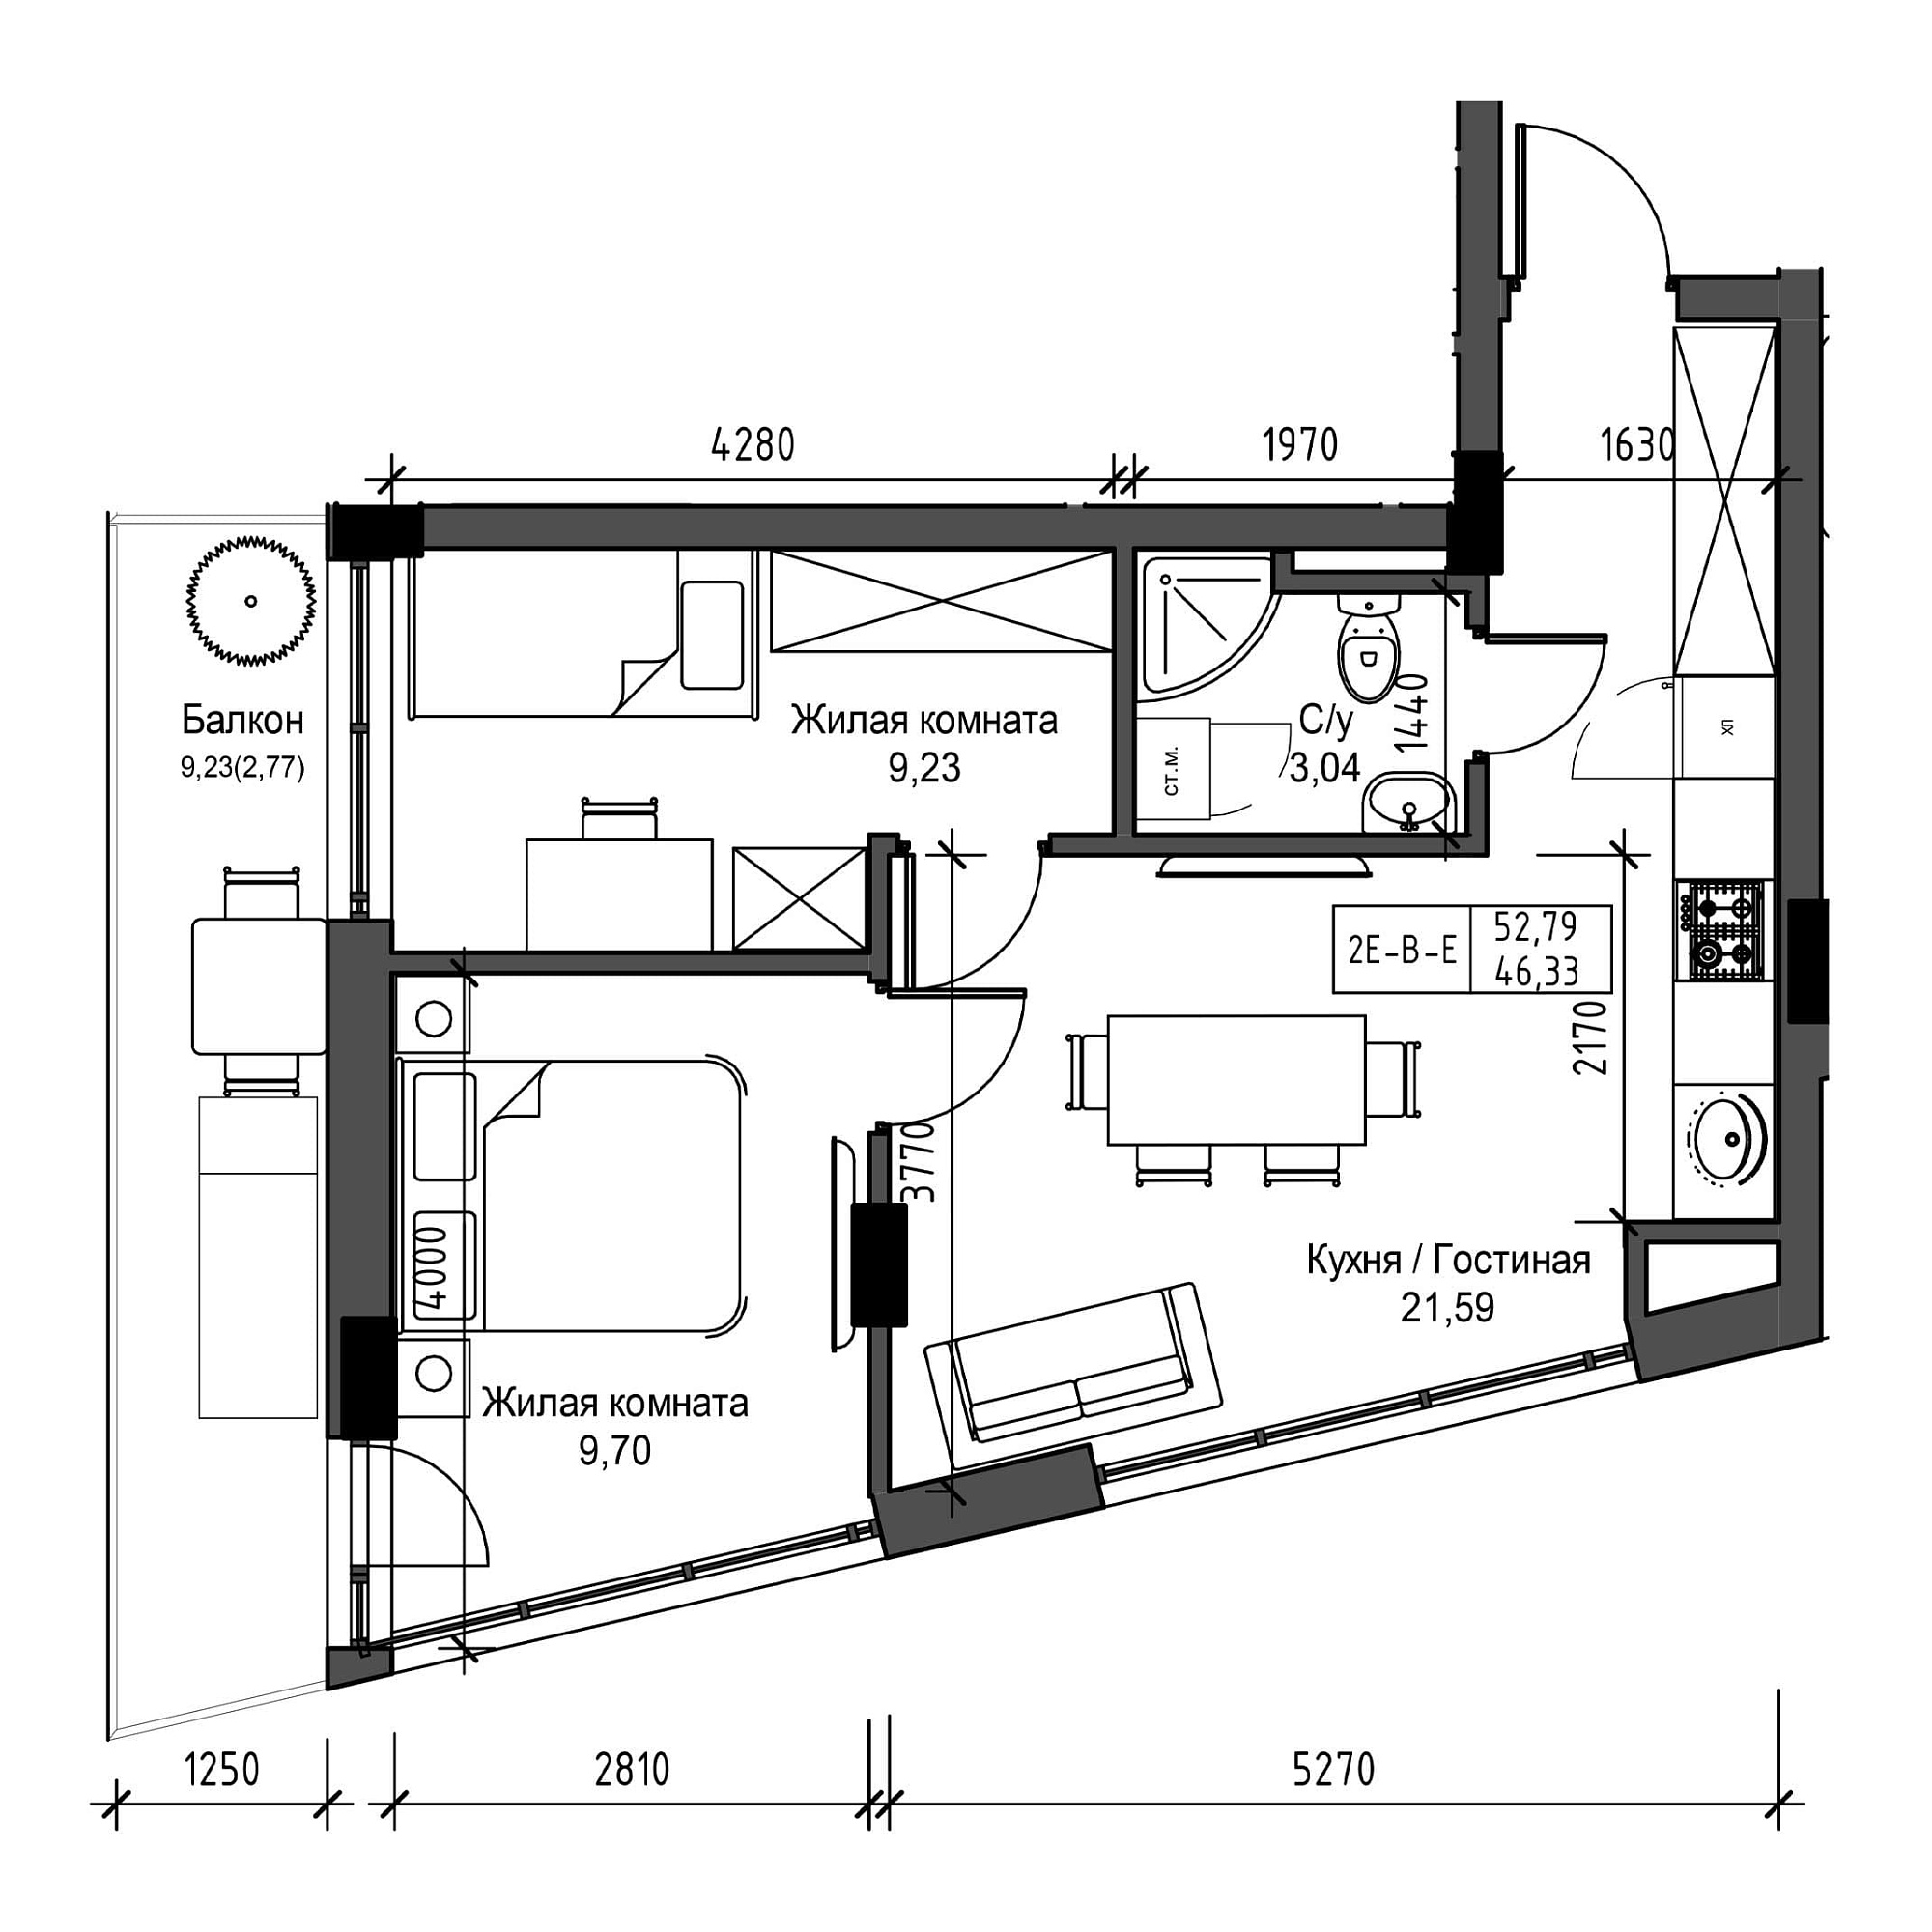 Планування 2-к квартира площею 46.33м2, UM-001-07/0009.